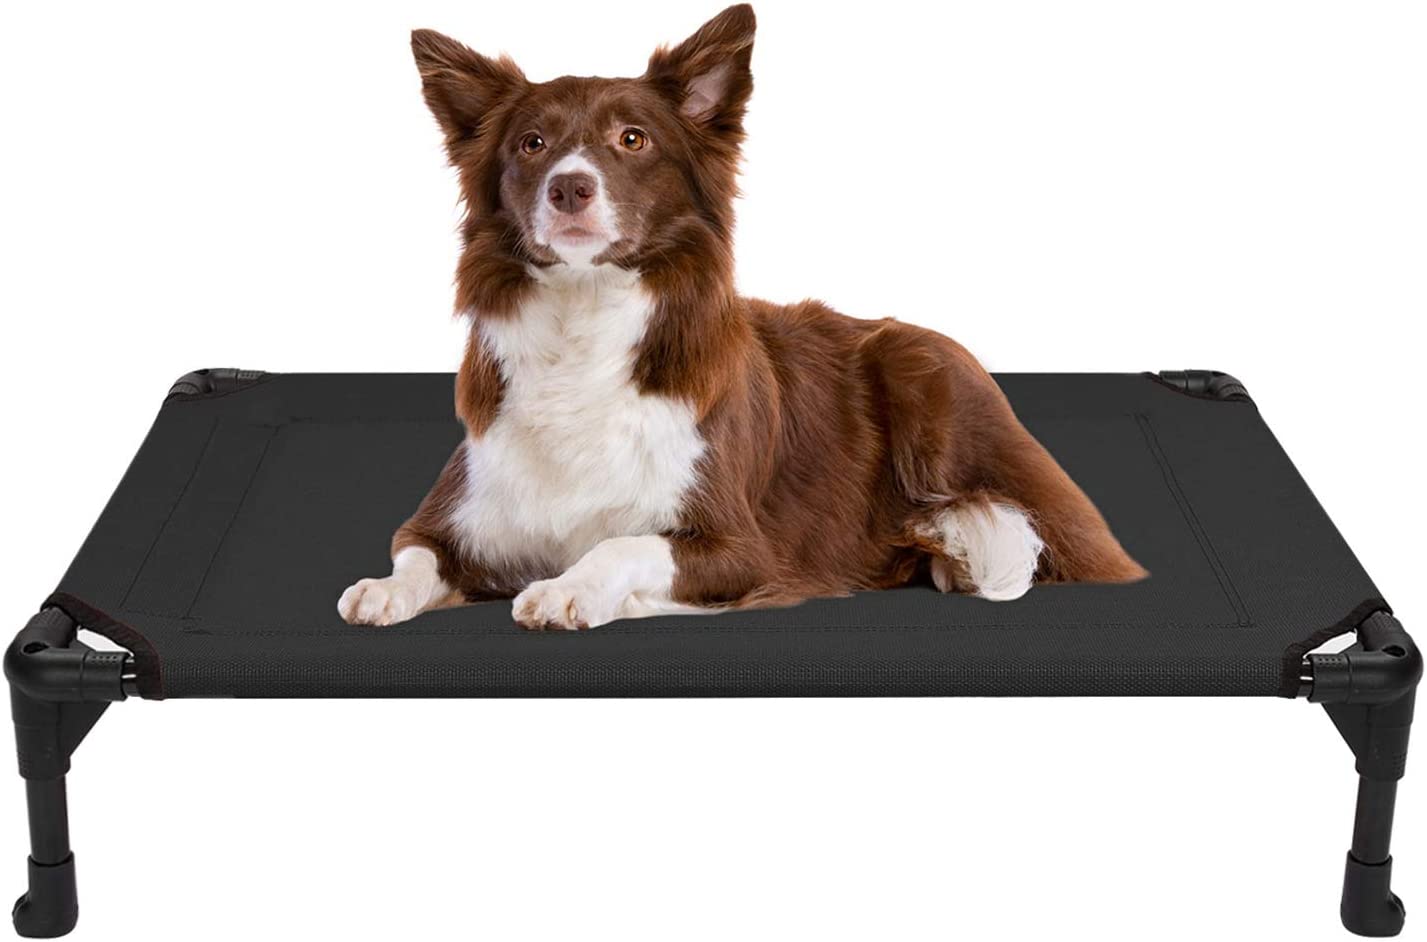 6. Veehoo Cooling Elevated Dog Bed